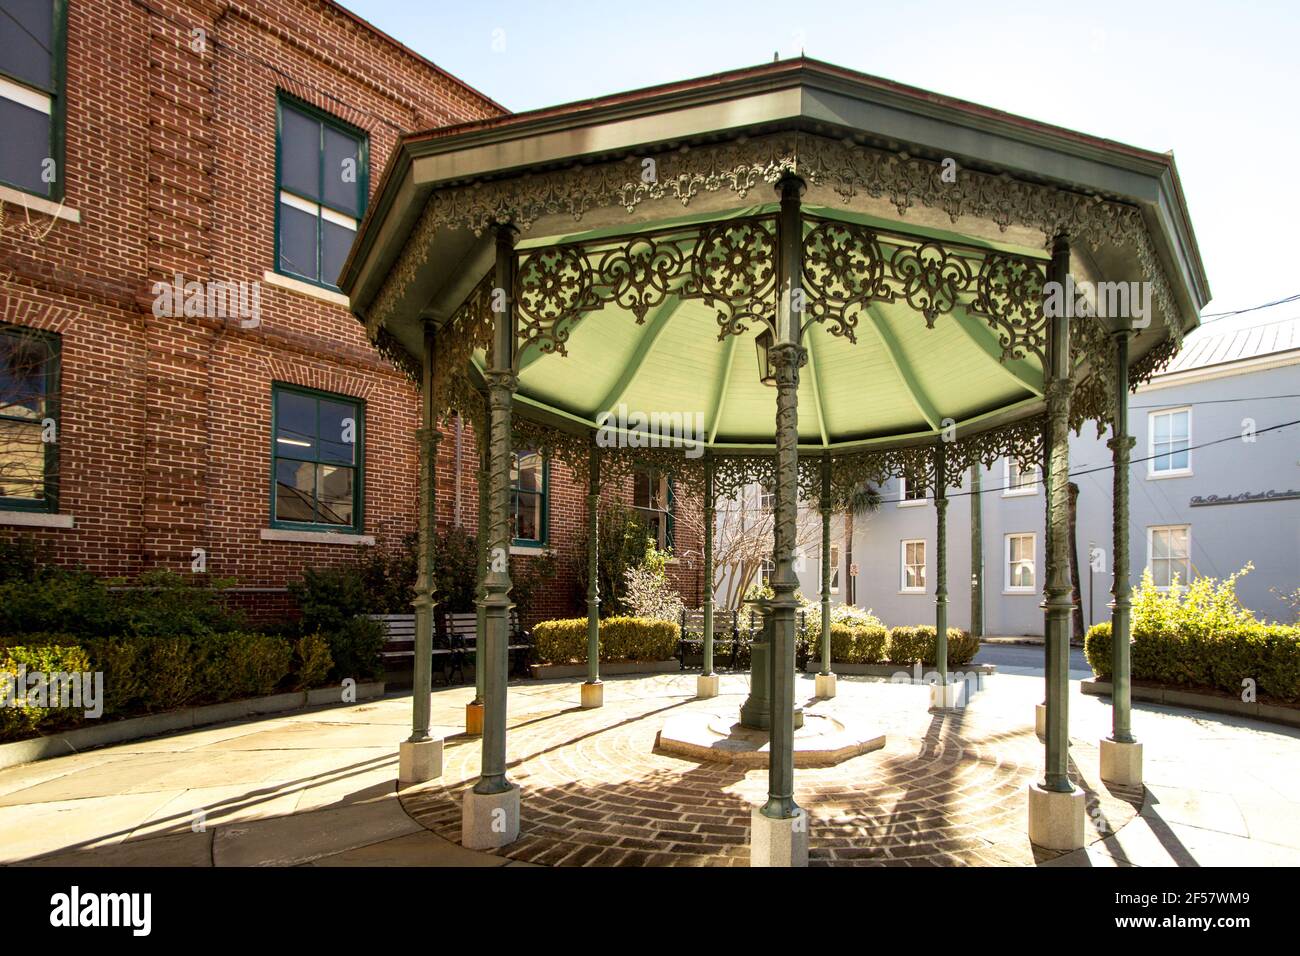 Charleston, South Carolina, USA - 23. Februar 2021: Kunstvoller Pavillon mit schmiedeeisernem Design in einem Stadtpark von Charleston, South Carolina. Stockfoto